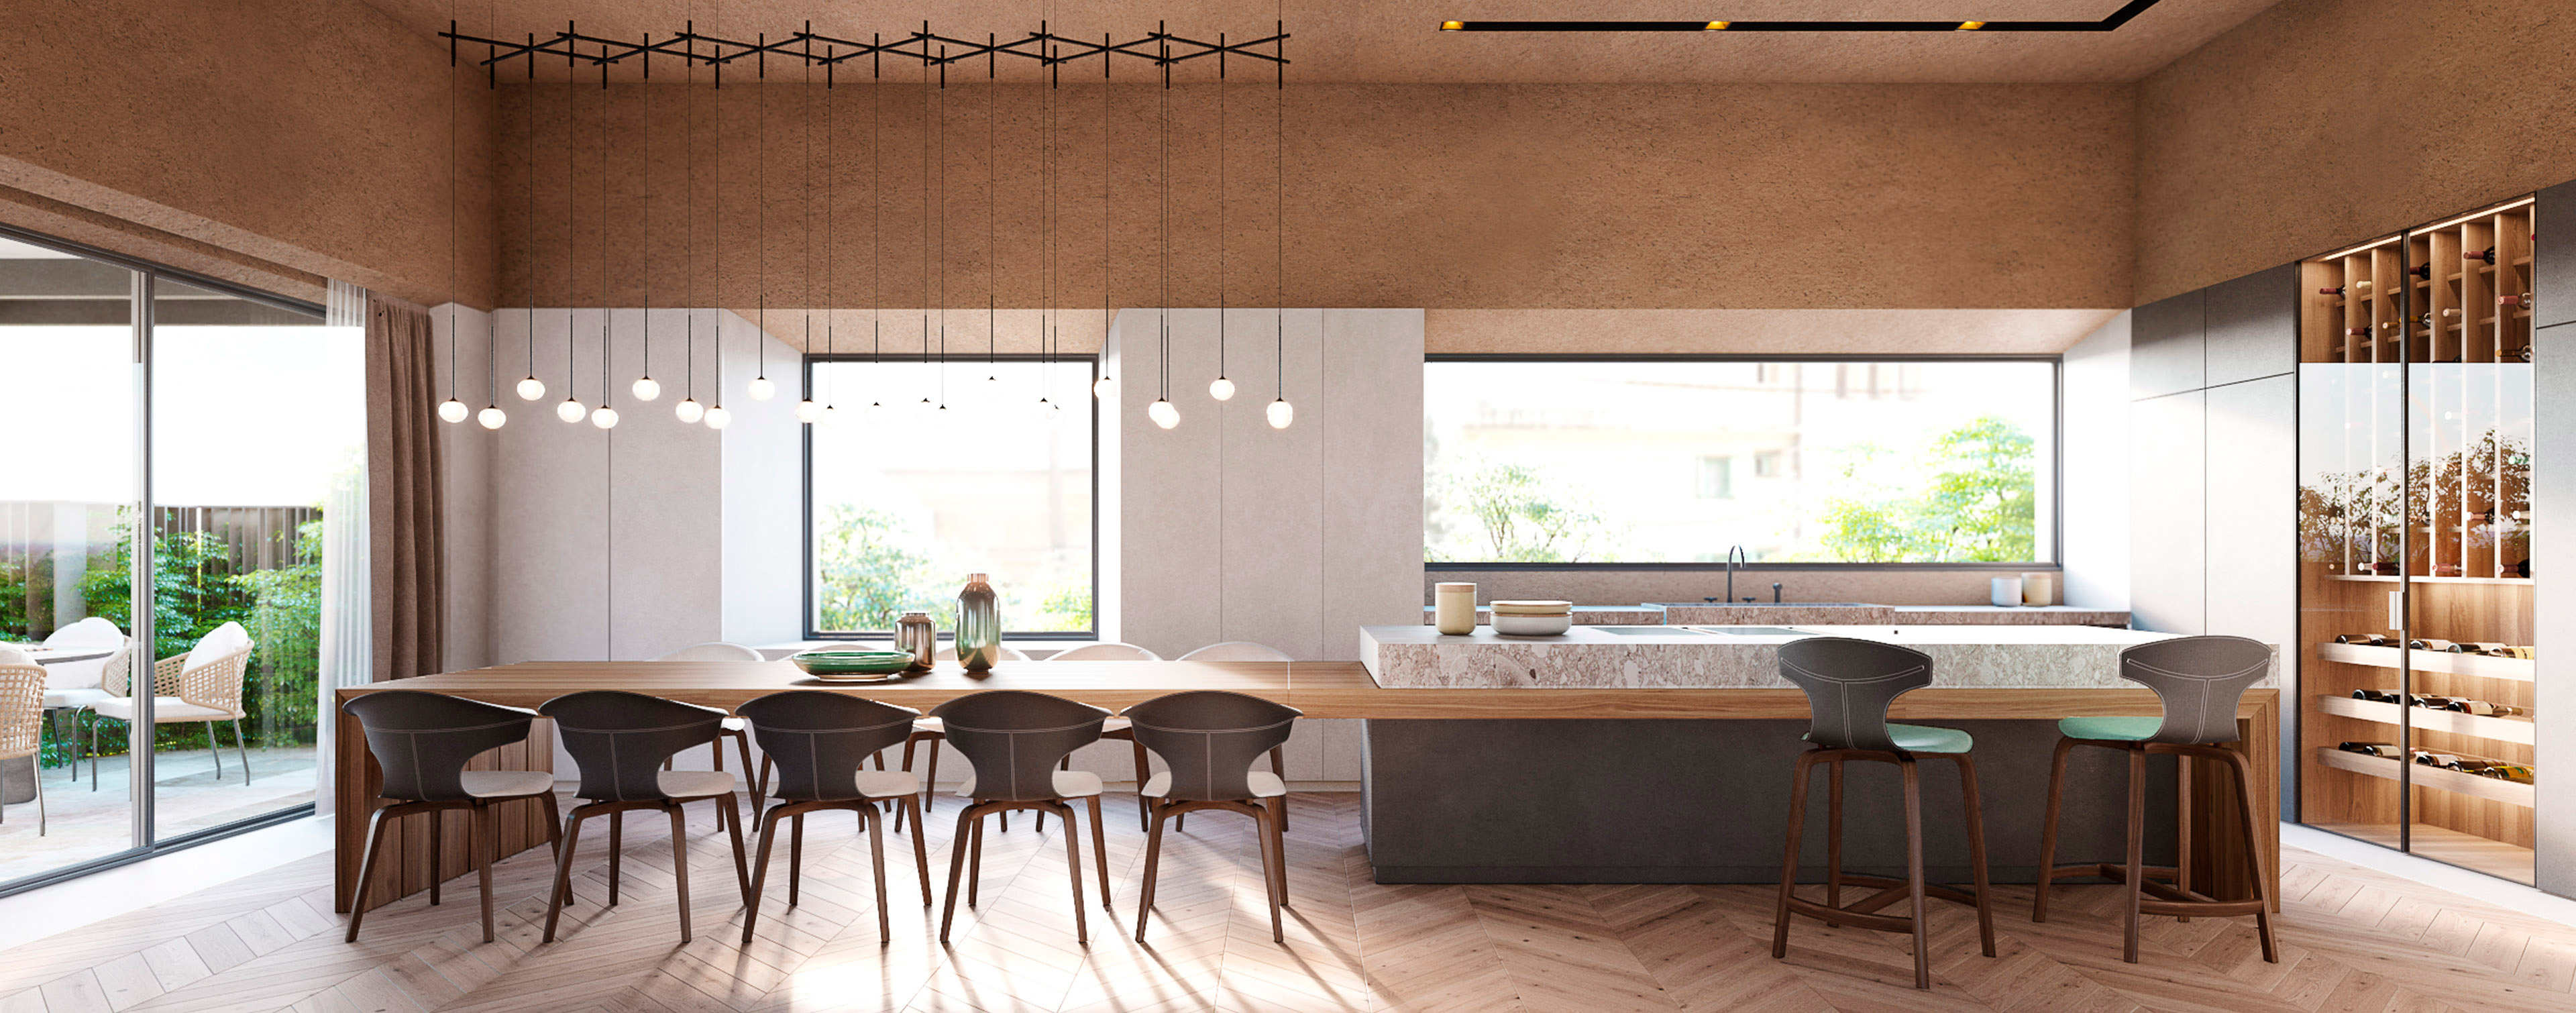 luv studio luxury architects barcelona pedralbes spc house IMG 01 - LUV Studio - Architecture & Design - Barcelona